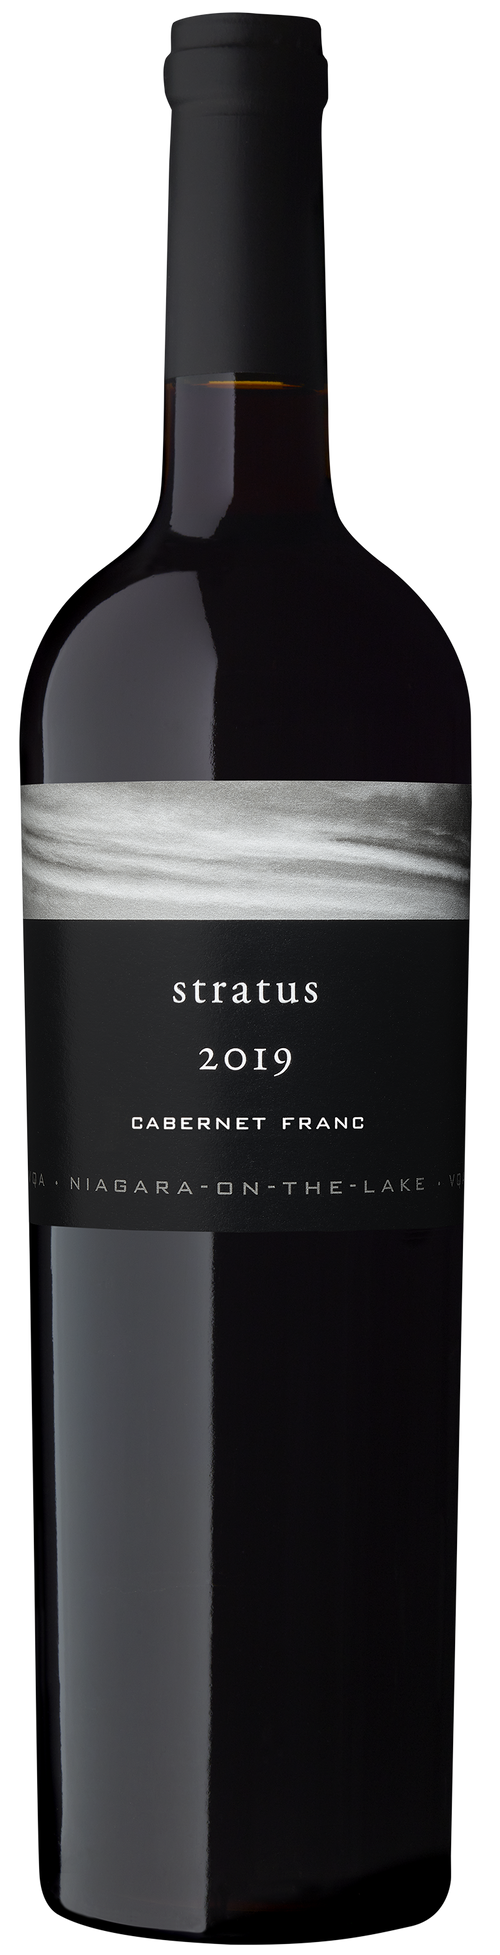 STRATUS 2019 CABERNET FRANC, 750 ML